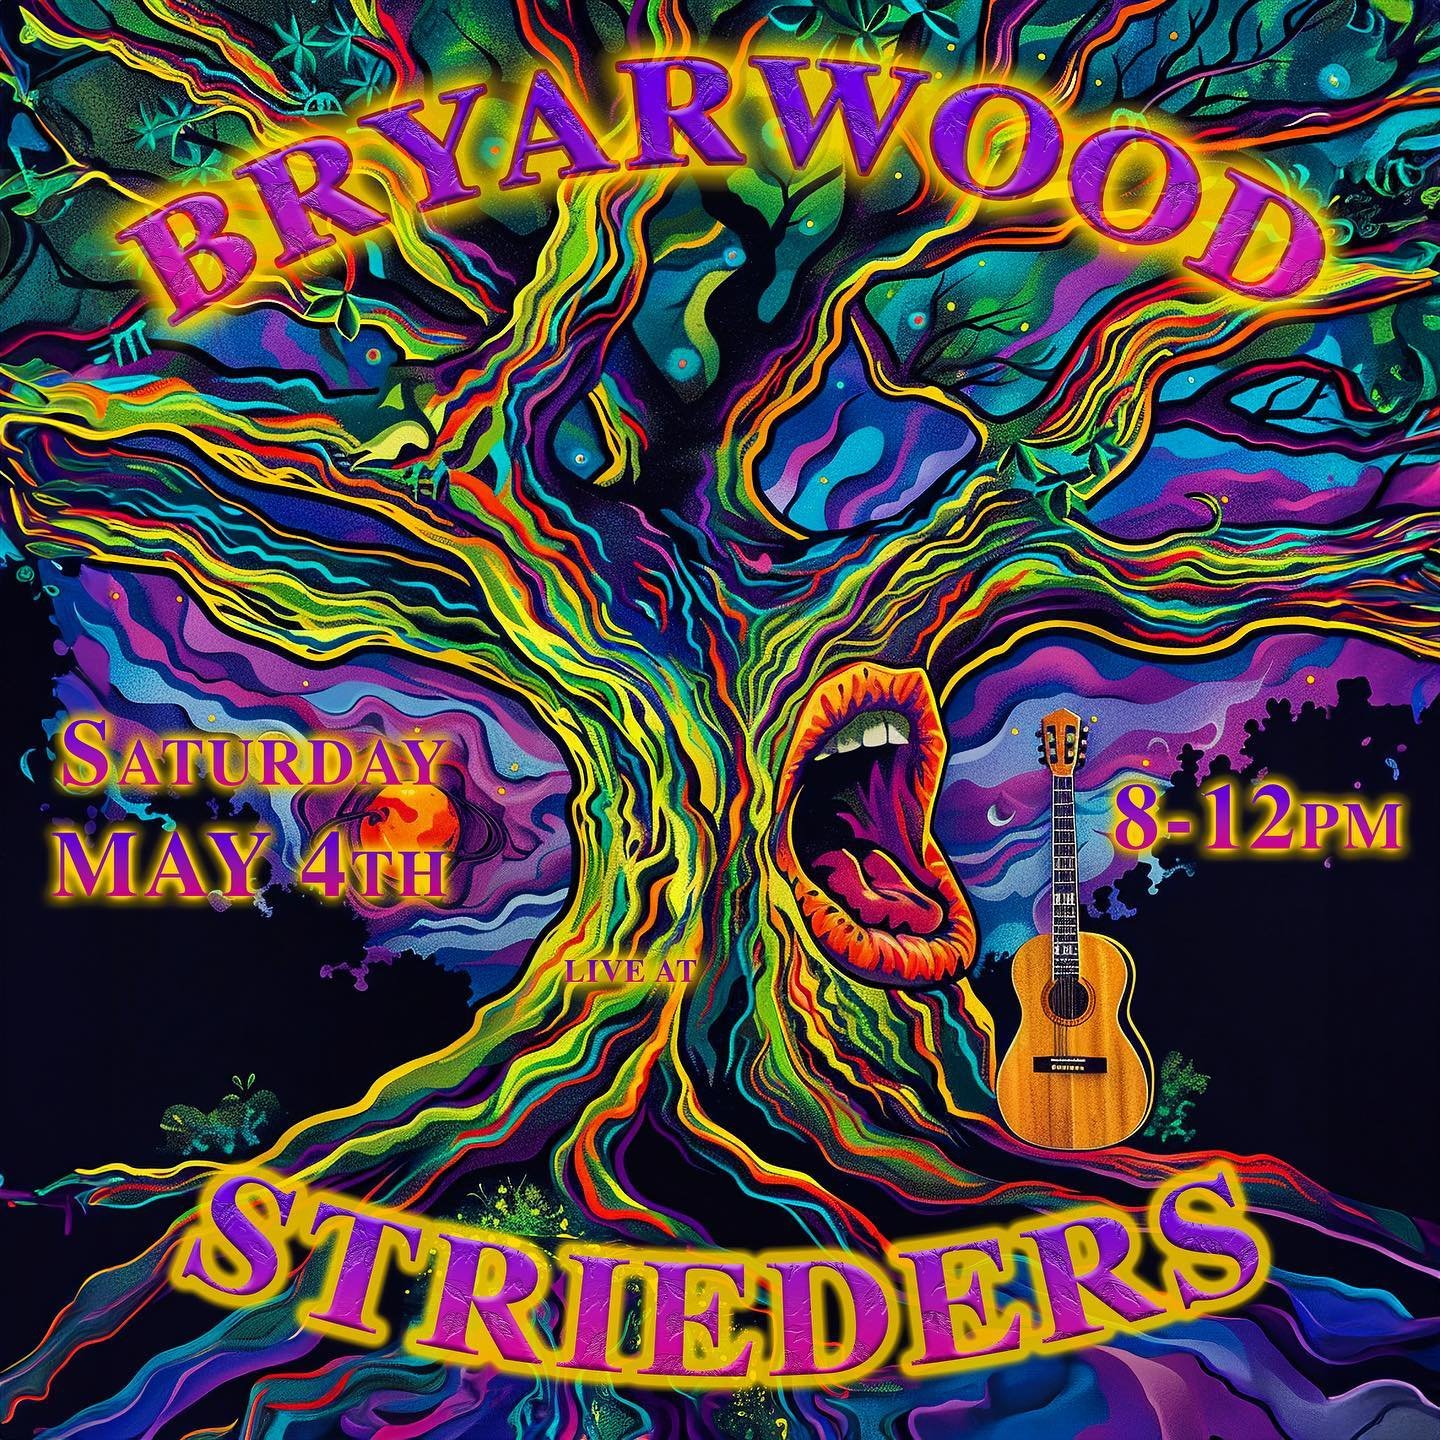 Bryarwood is bringing the tunes and fun to @striedersbarandkitchen this weekend. #savannah #savannahband #livemusic #music #art912 #musicians